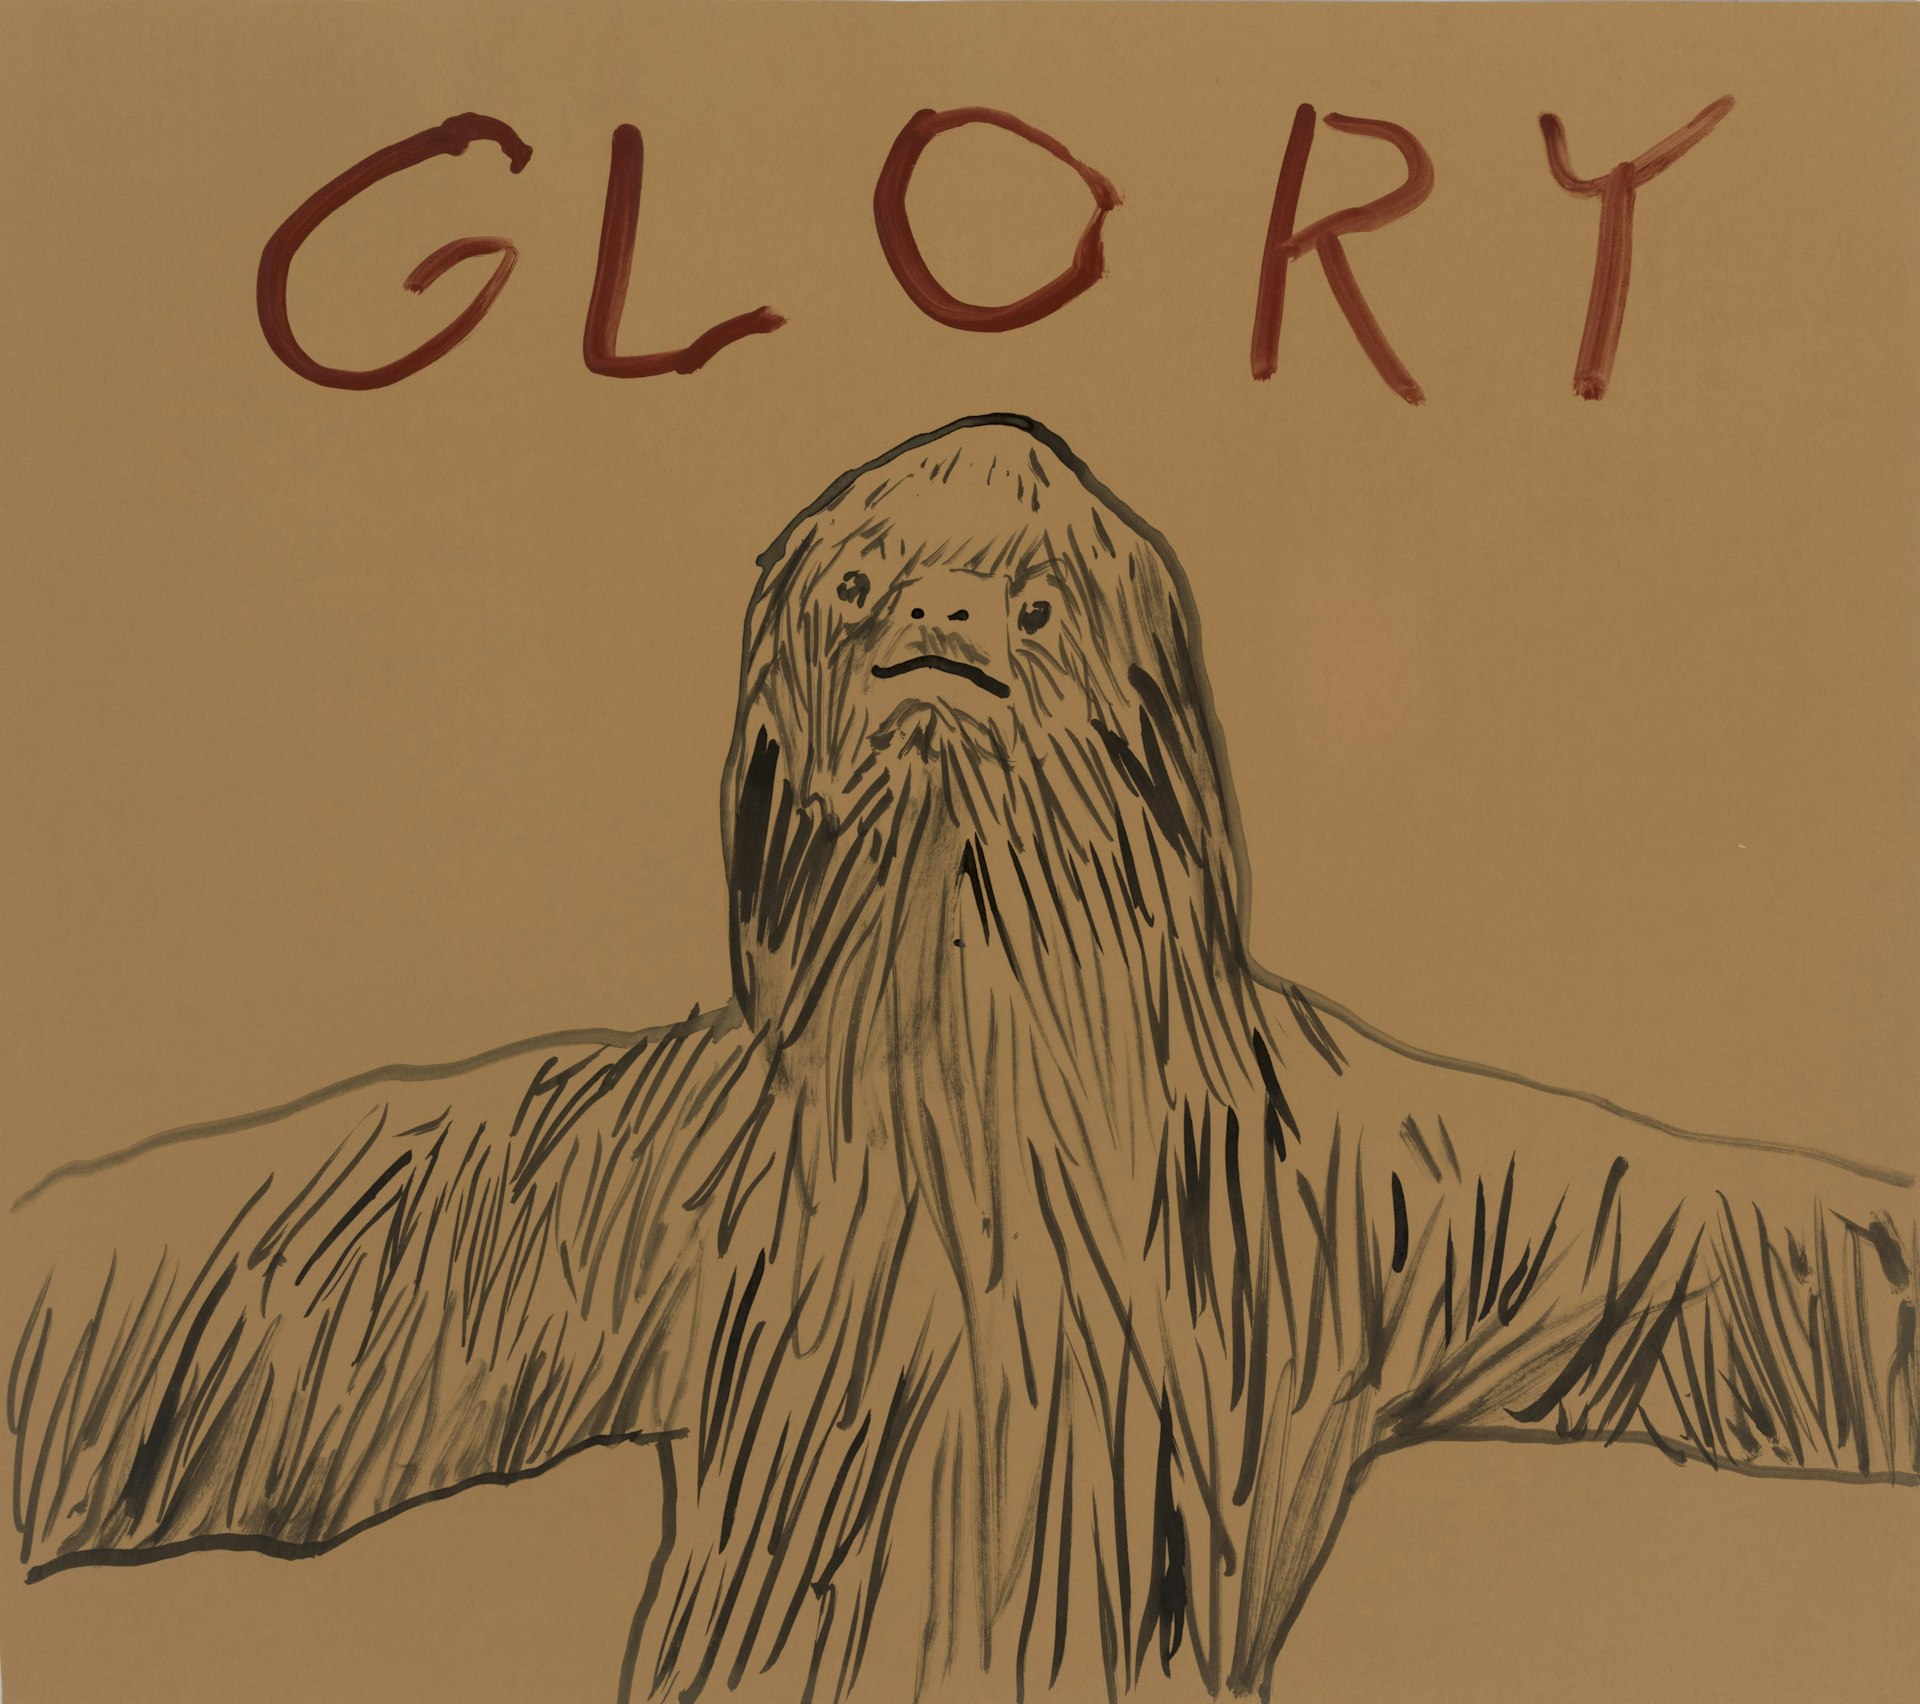 eggers_40 glory_sloth